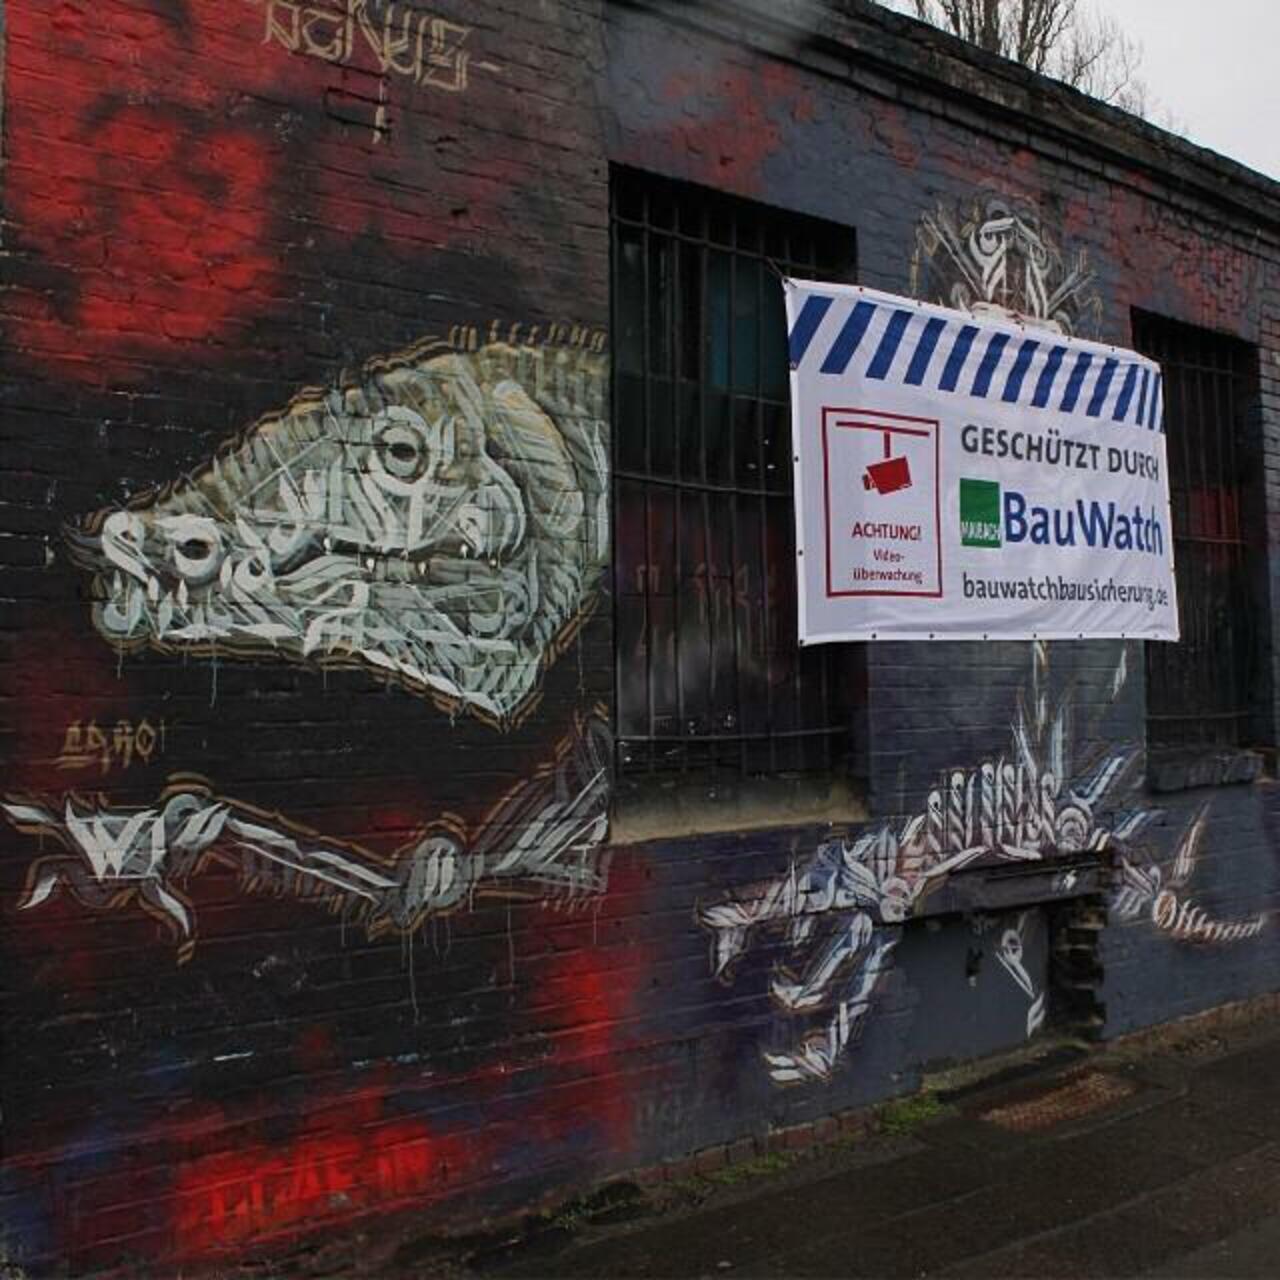 #Berlin #Allemagne #streetart #street #art #urbanart #urbantag #graffiti #streetartberlin by becombegeek http://t.co/B2Mx40F4DV